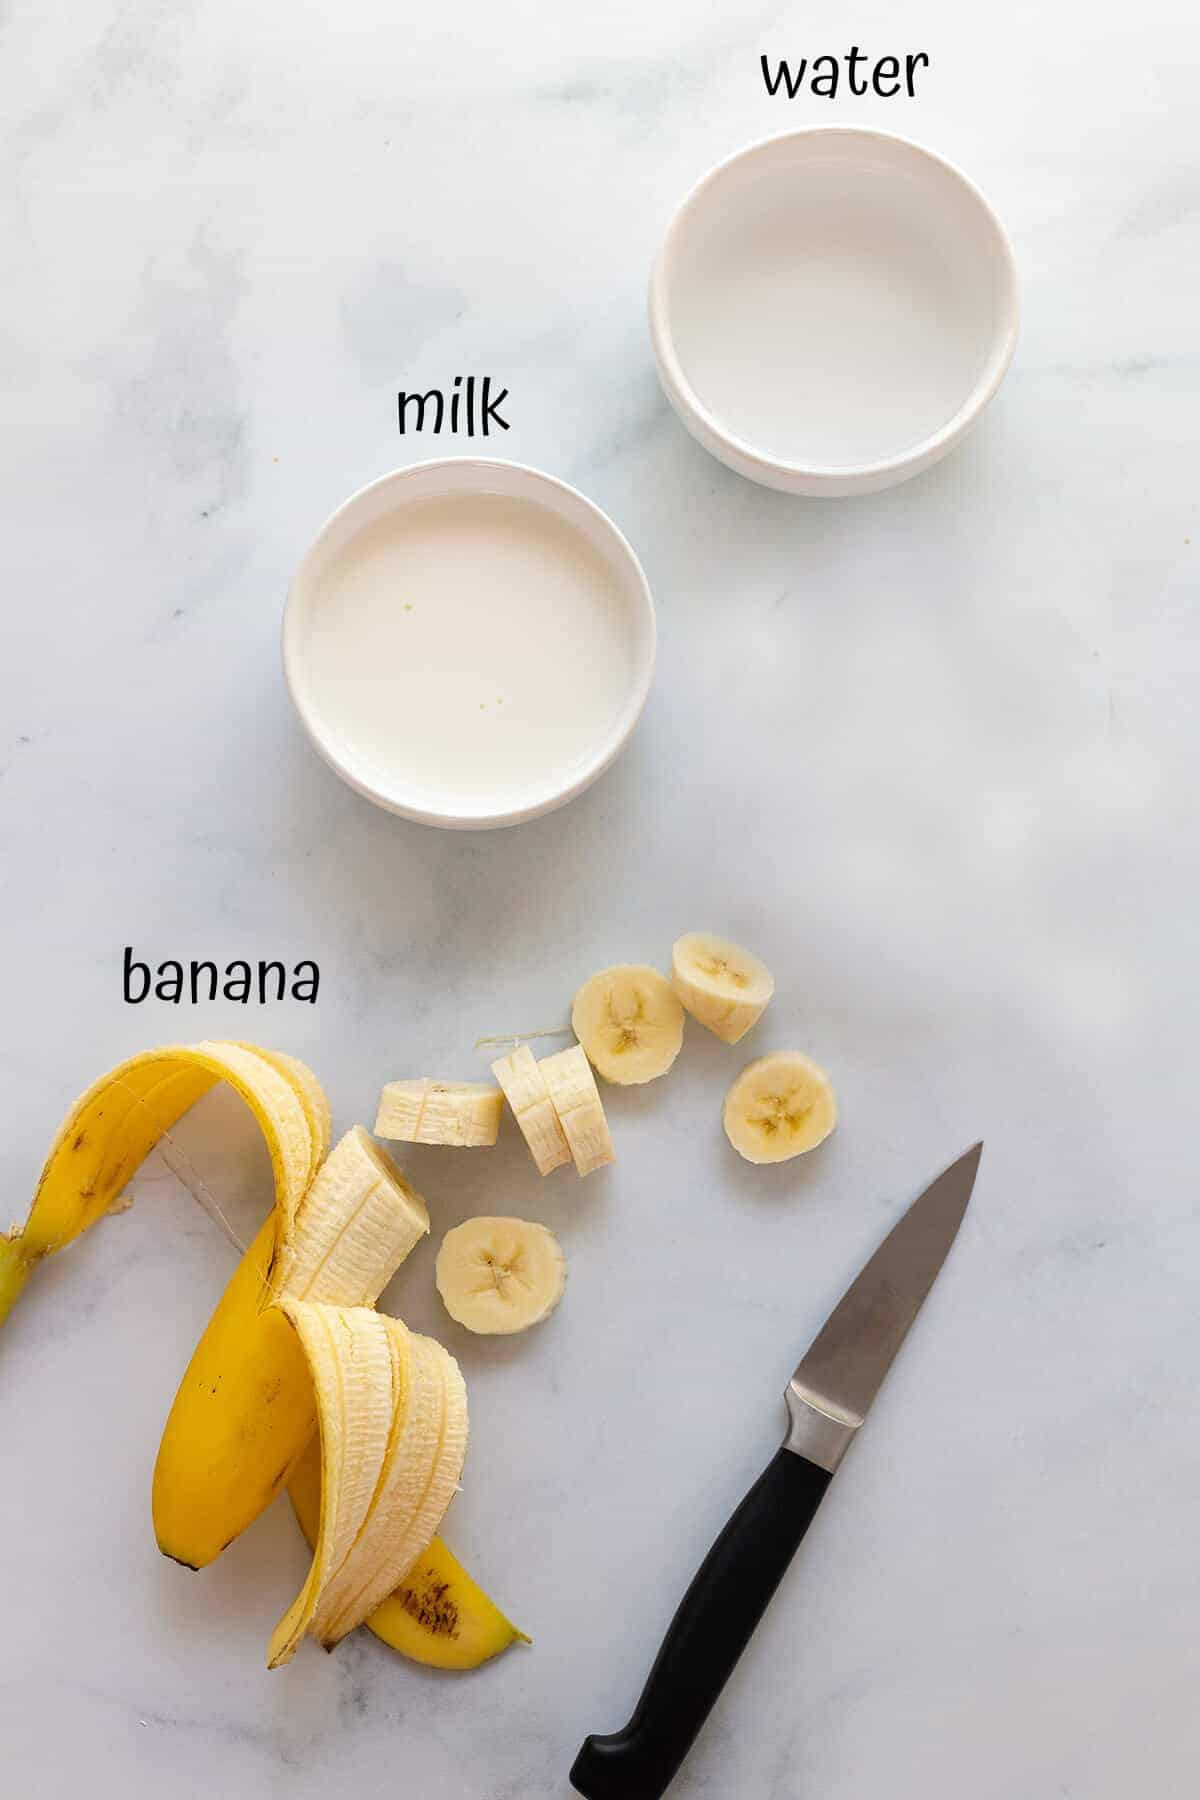 ingredients for banana milk: banana, milk, and water.